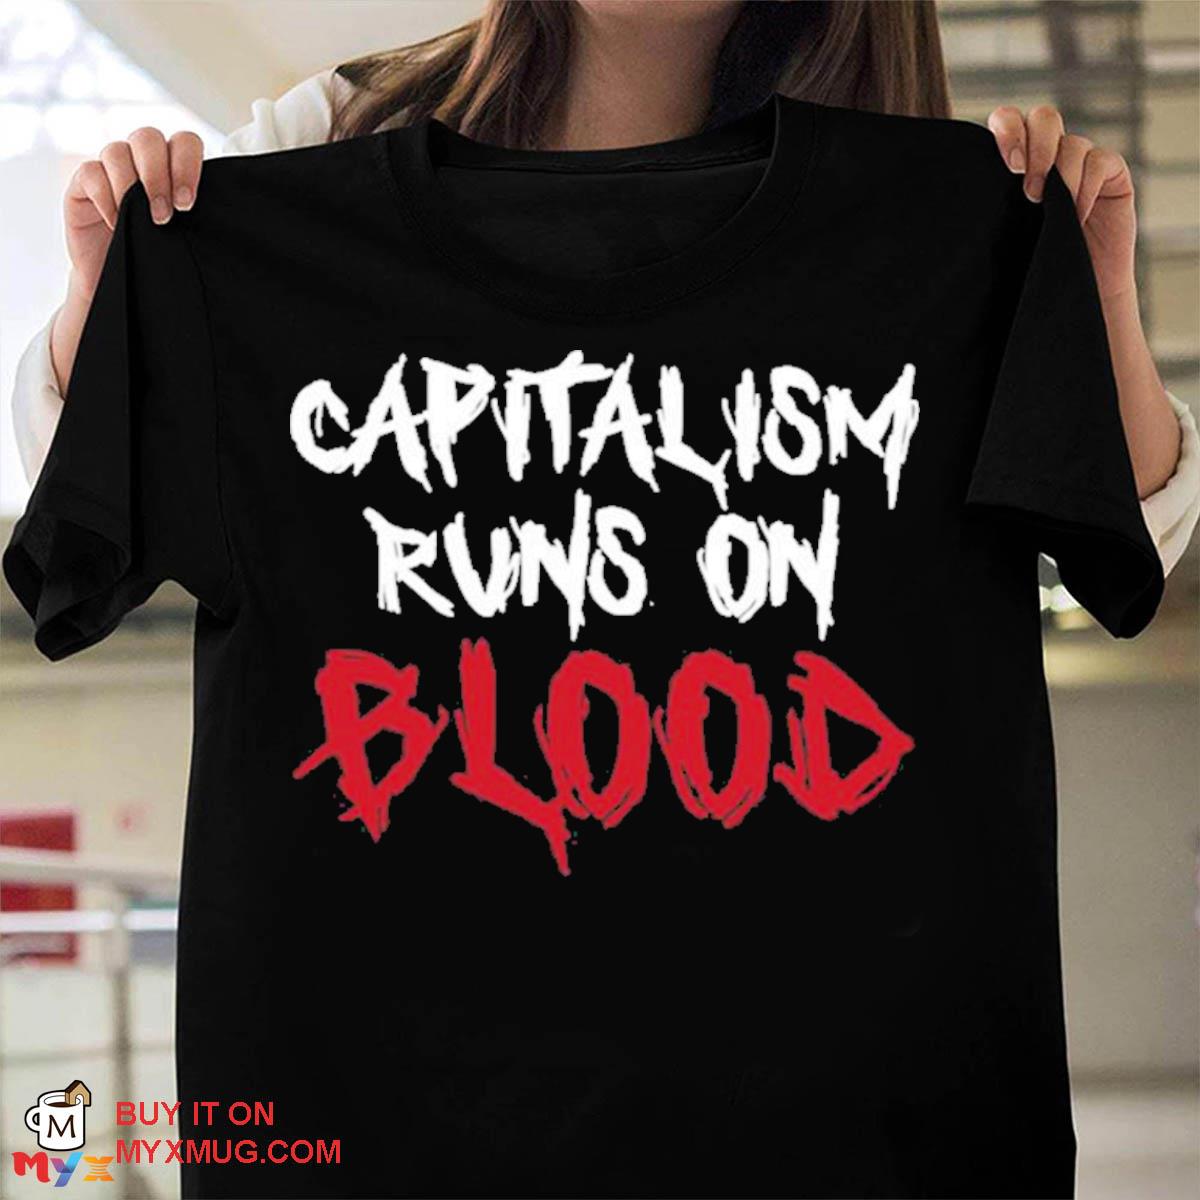 Capitalism runs on blood war is racket left flank vets merch capitalism runs on blood s unisex shirt